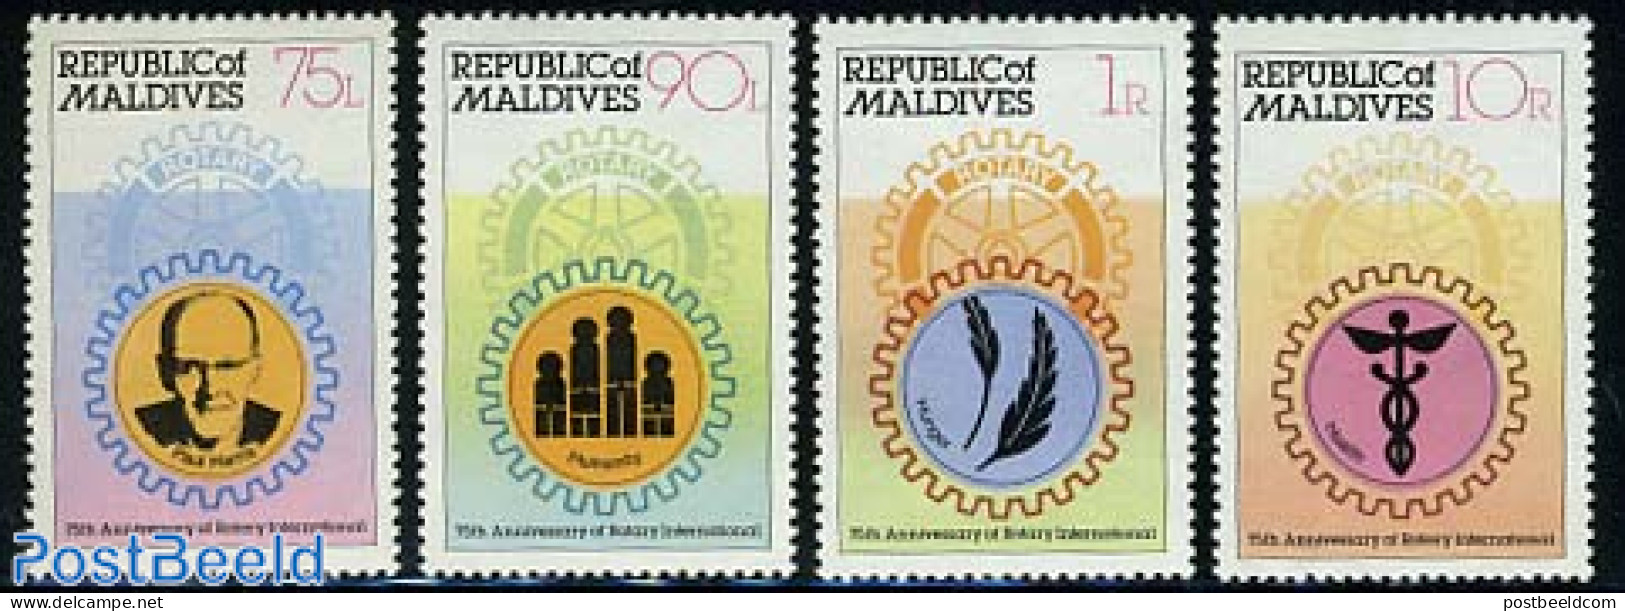 Maldives 1980 Rotary Club 4v, Mint NH, Various - Rotary - Rotary, Lions Club